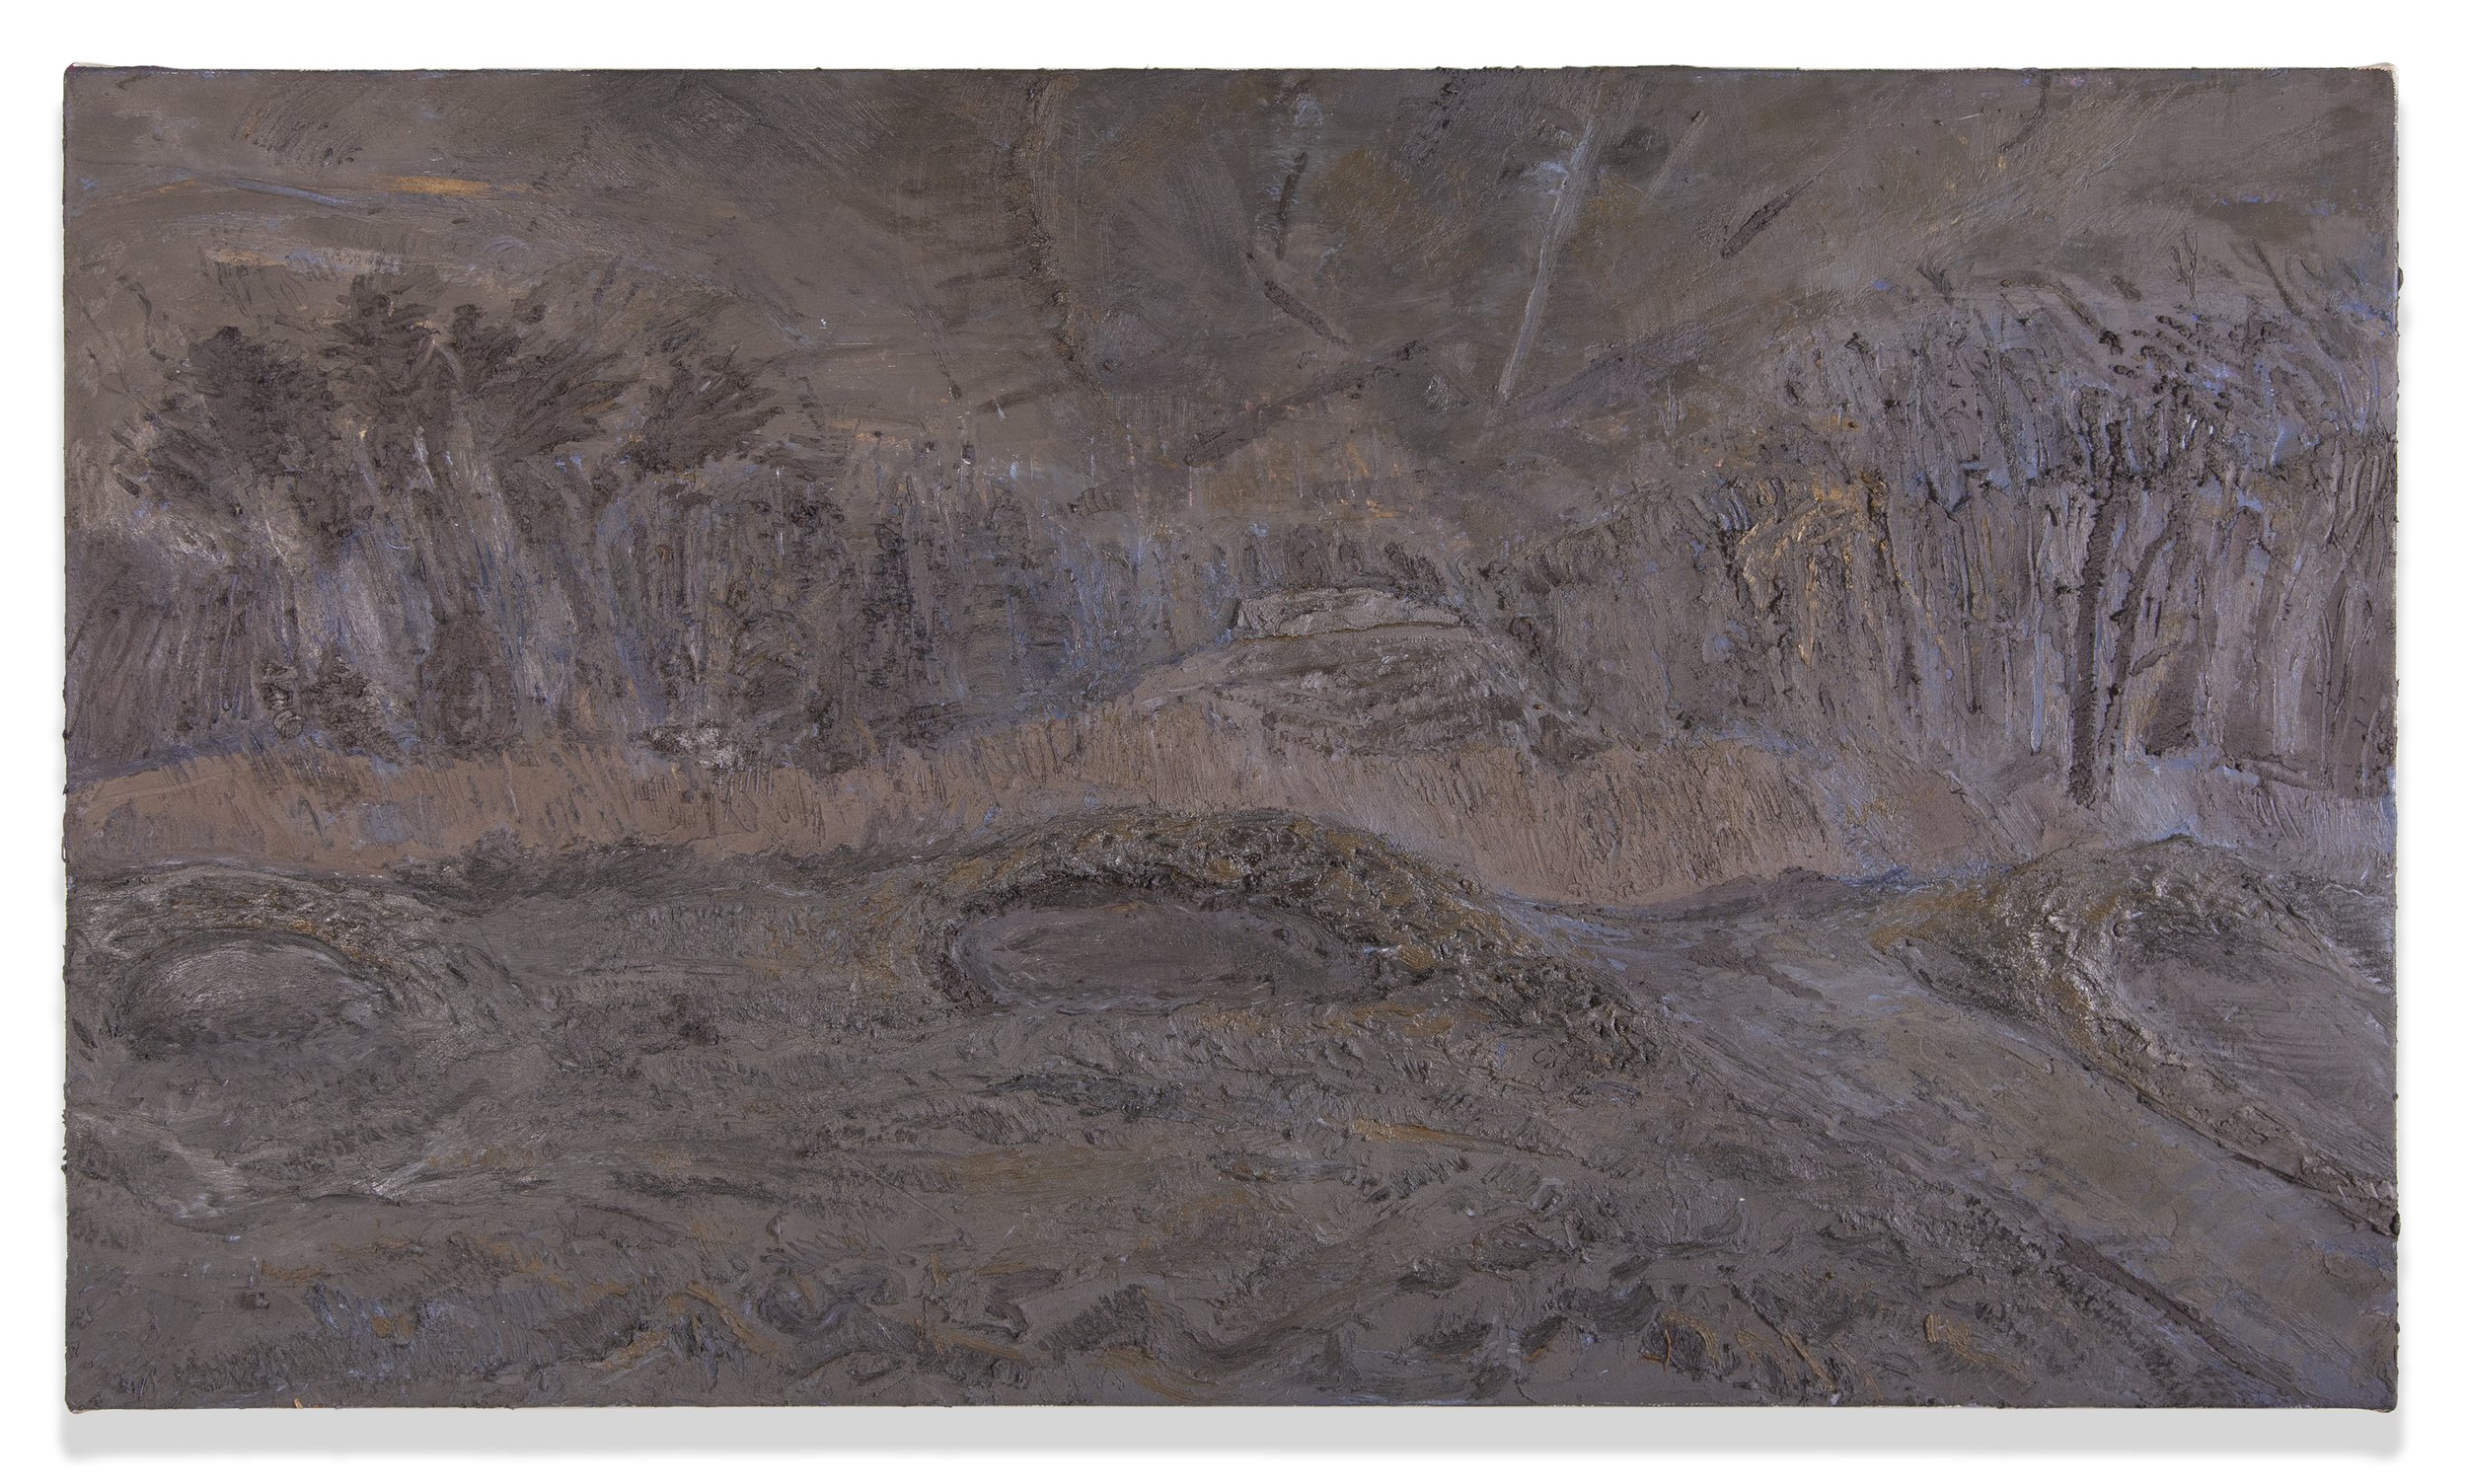  Elizabeth Flood, Battlefield (Chancellorsville, January), oil on canvas, 24 x 42 inches, 2022 